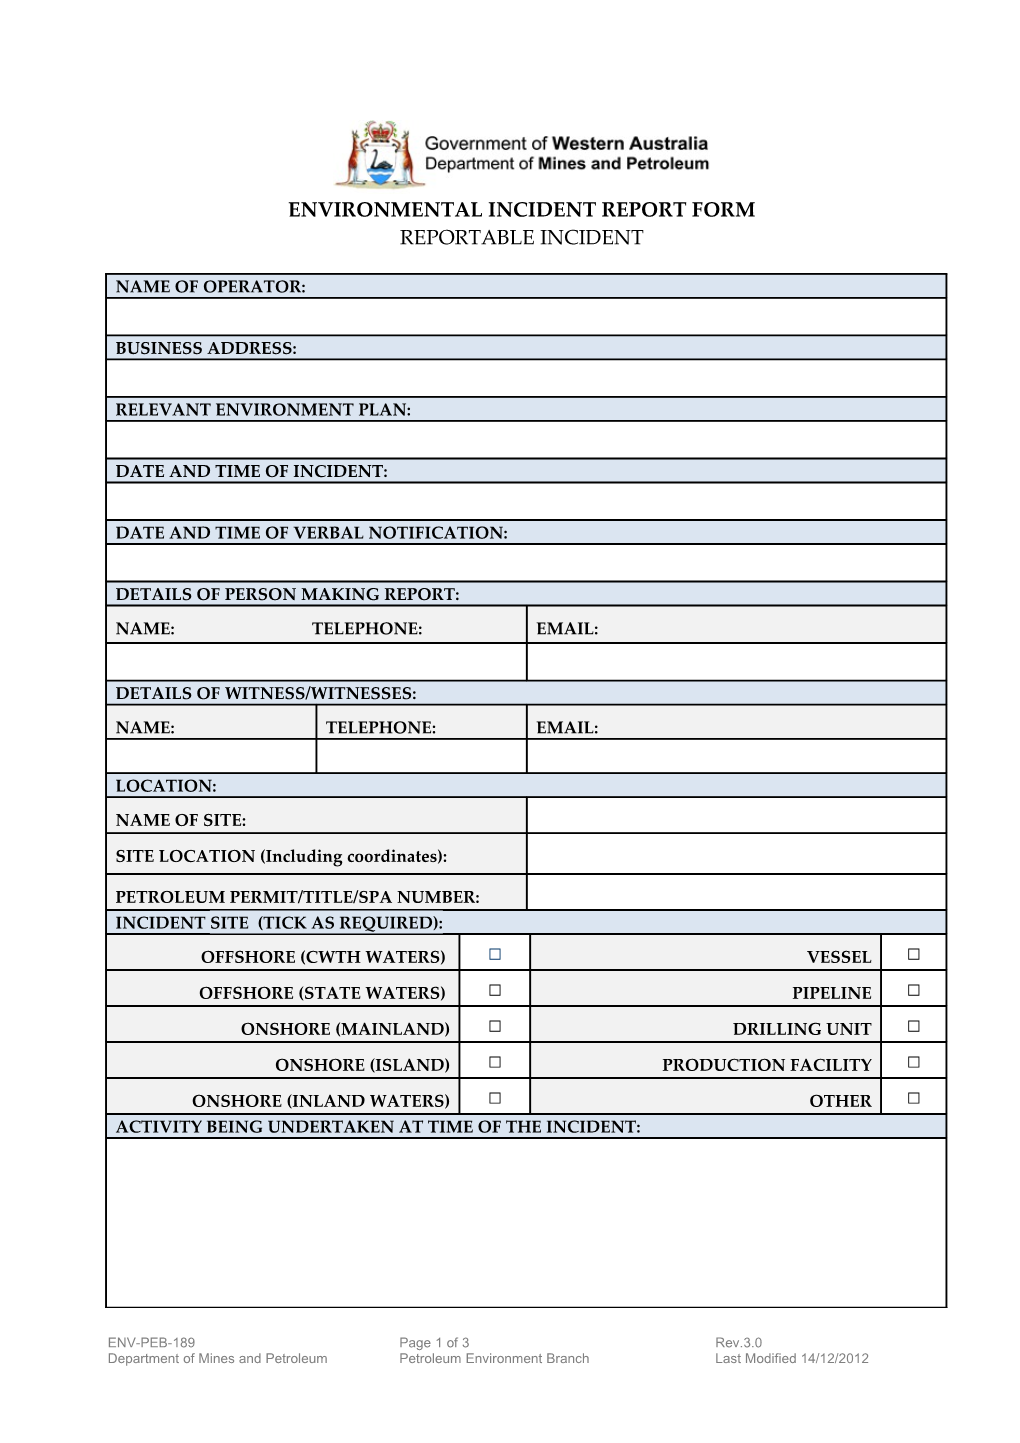 Incident Response Form